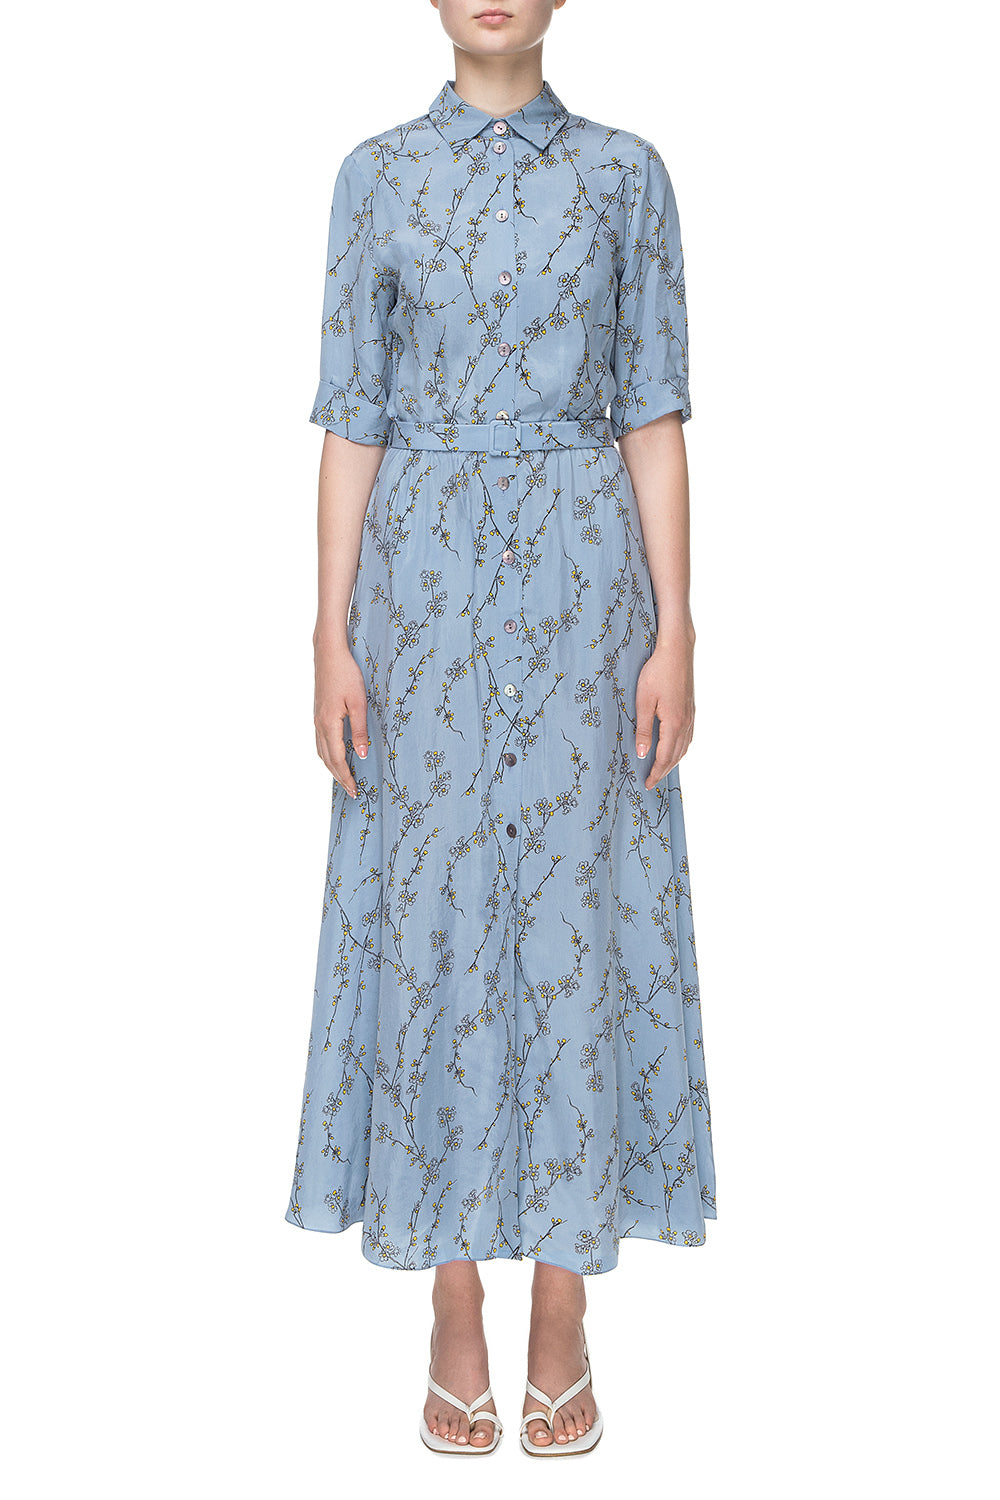 Blue floral printed shirt dress